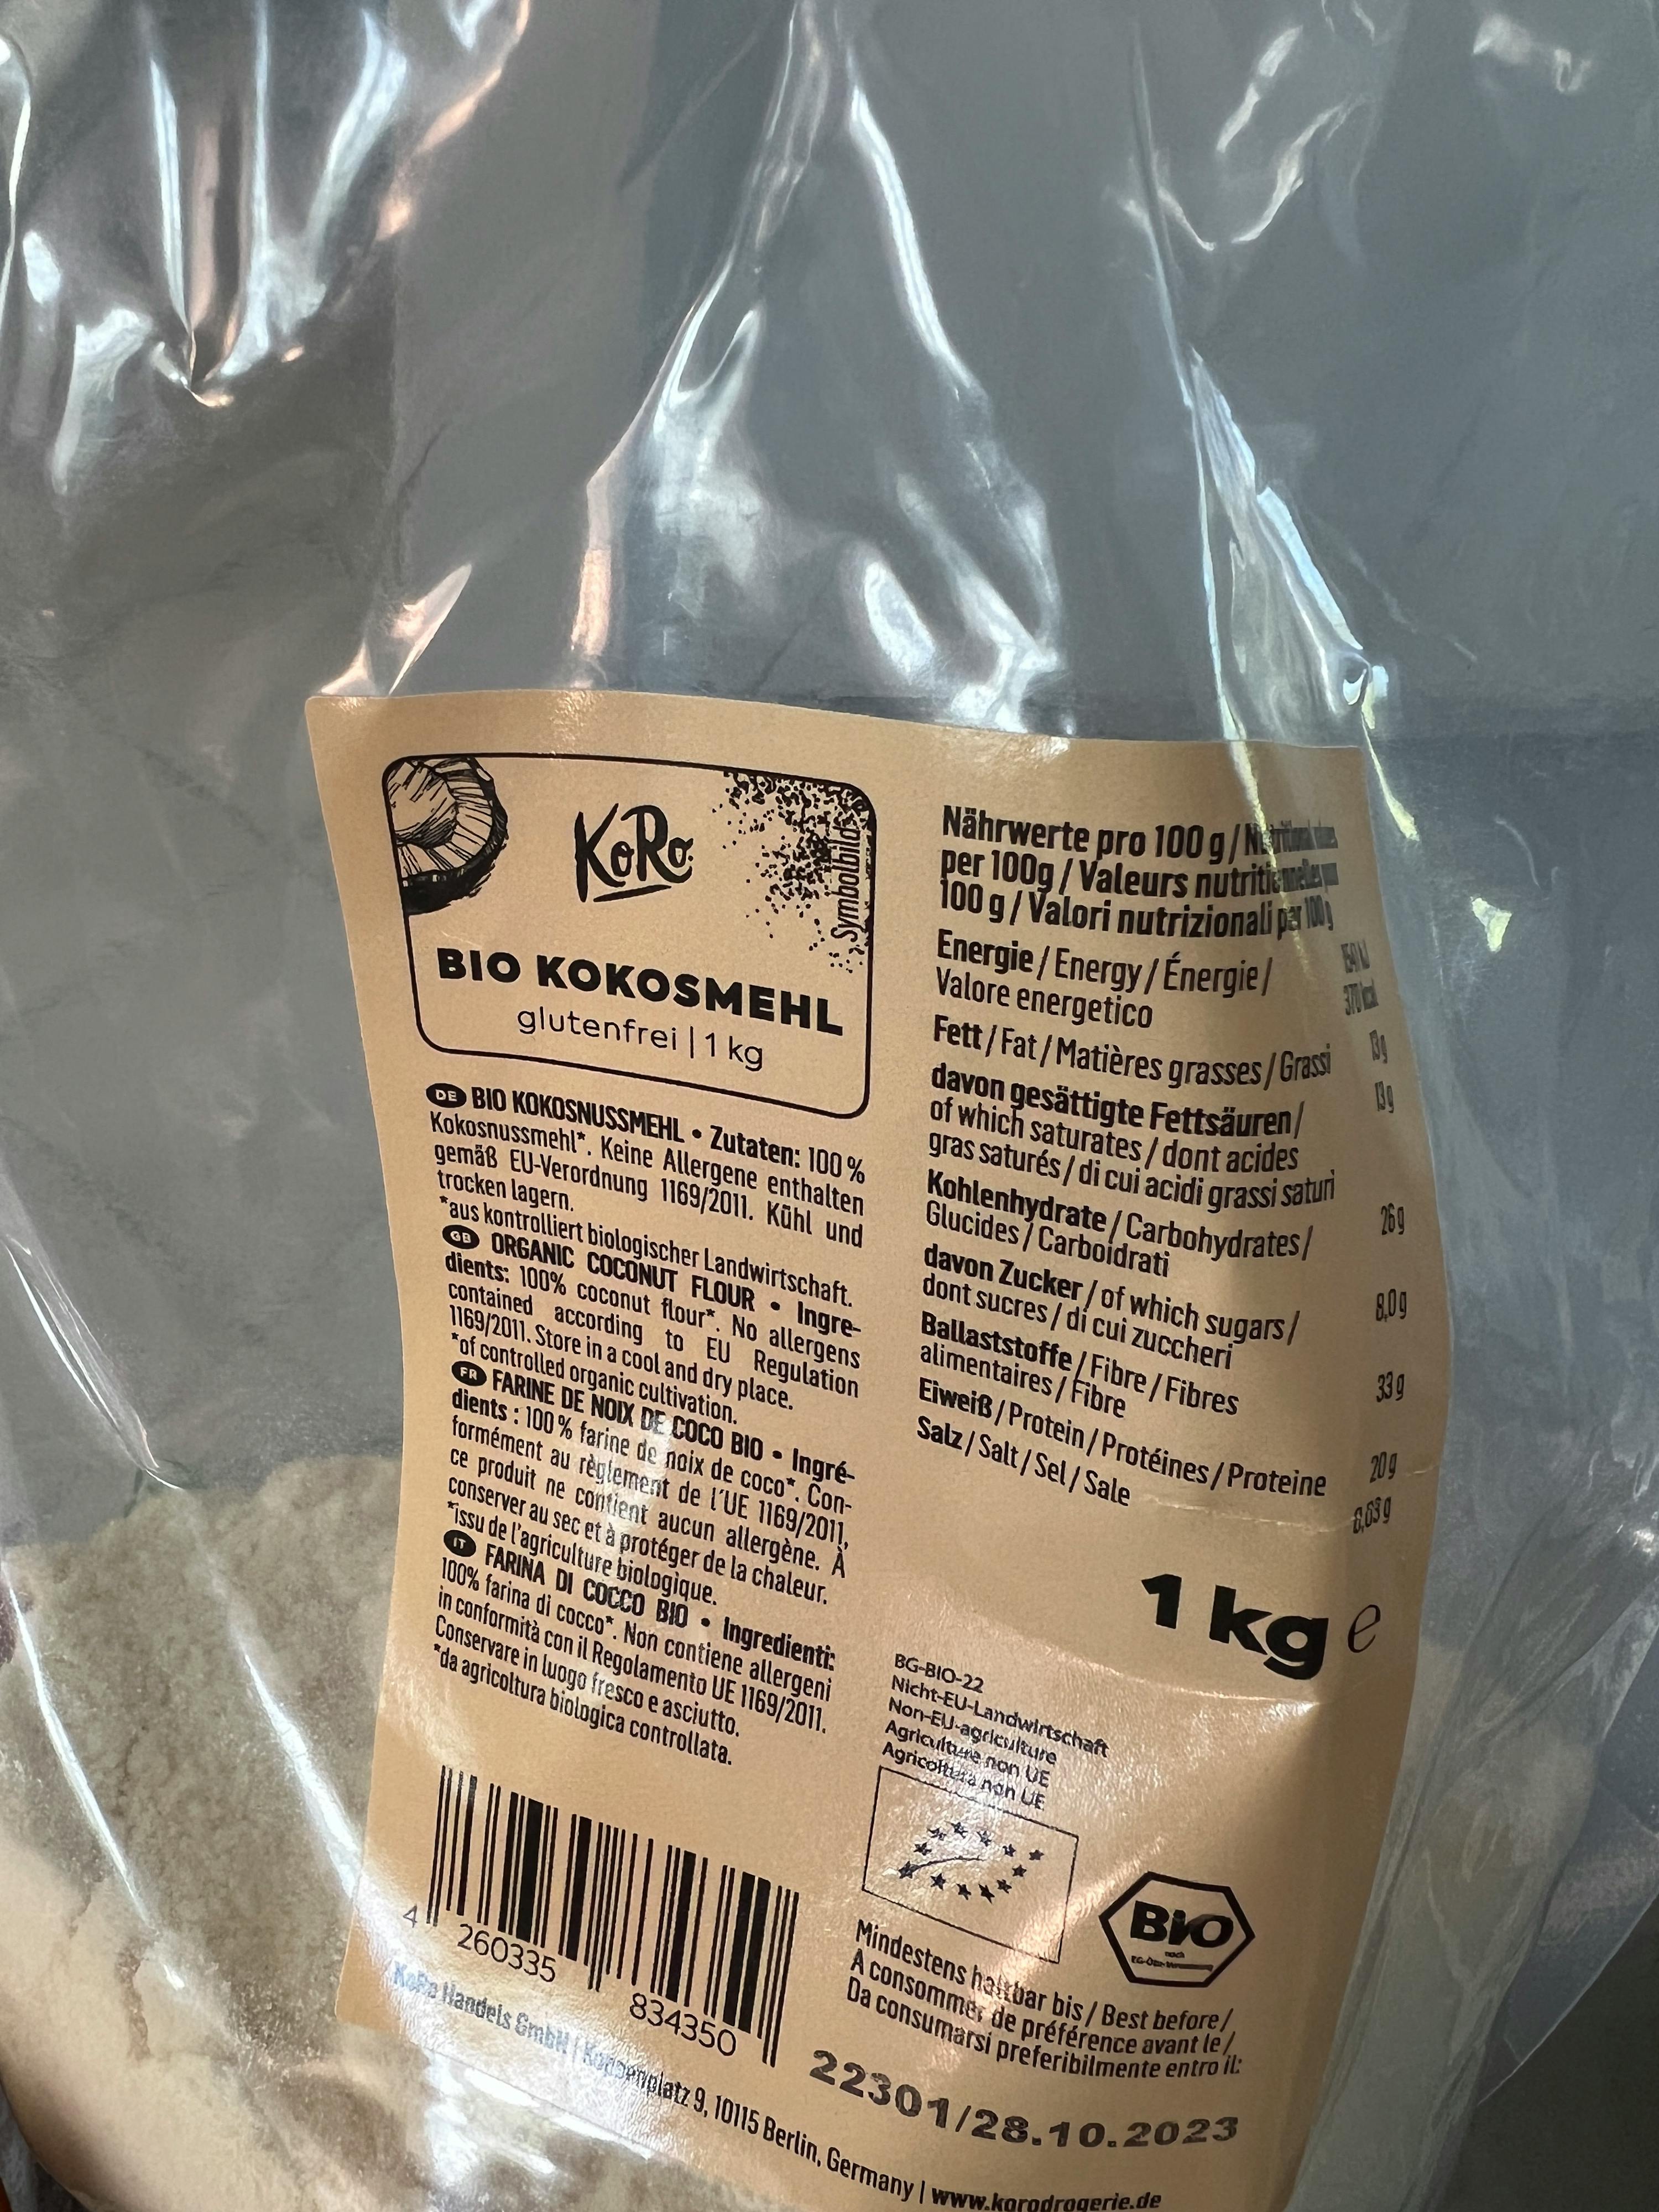 Kamelur 1kg farine de coco BIO déshuilée - farine de coco faible